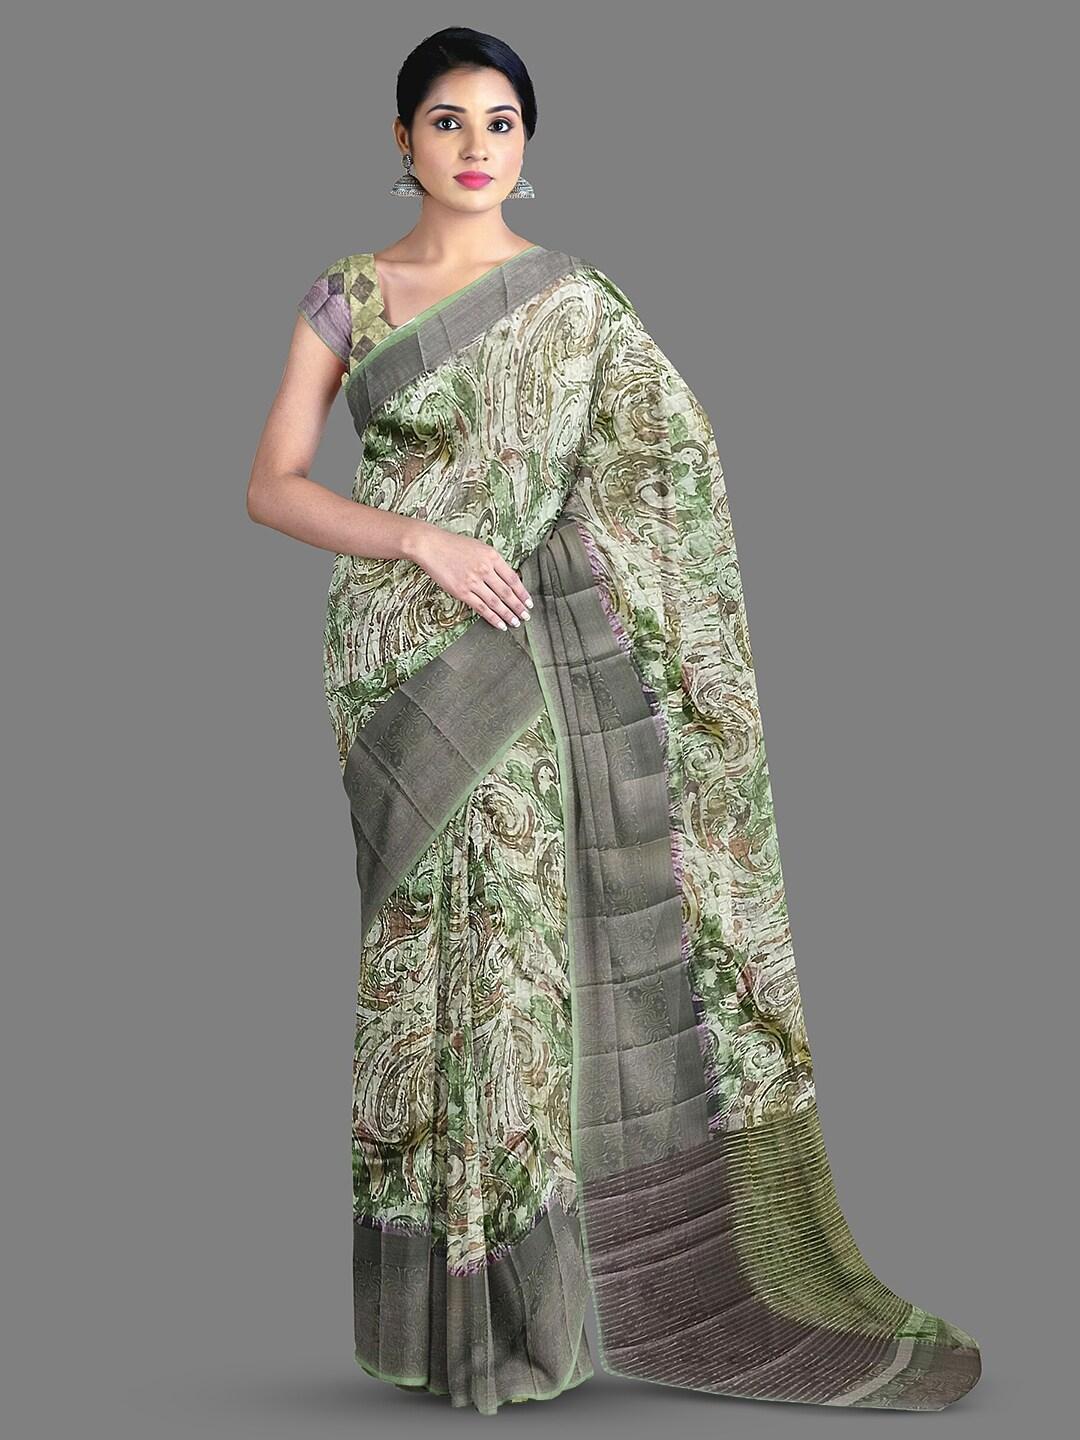 The Chennai Silks Abstract Printed Saree